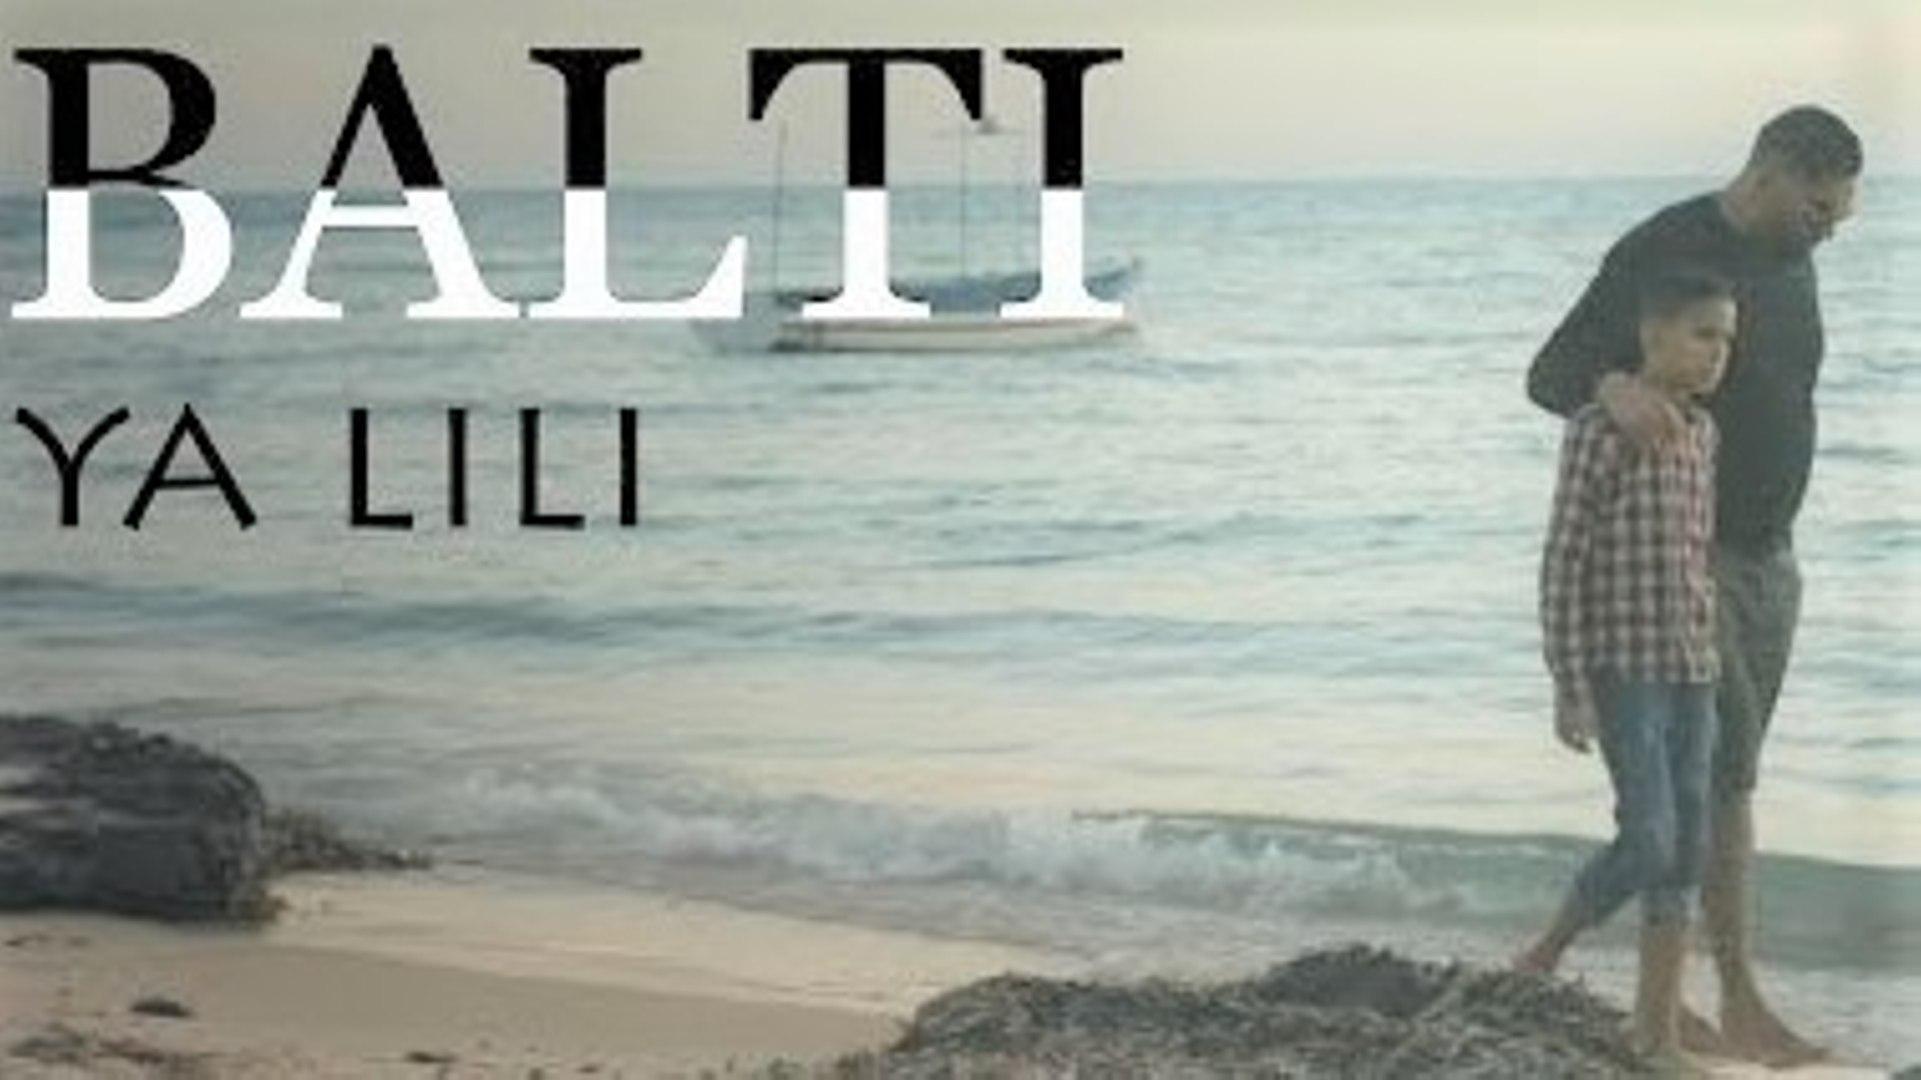 Balti Ya Lili Ya Lila -بلطي ياليلي for Android - APK Download